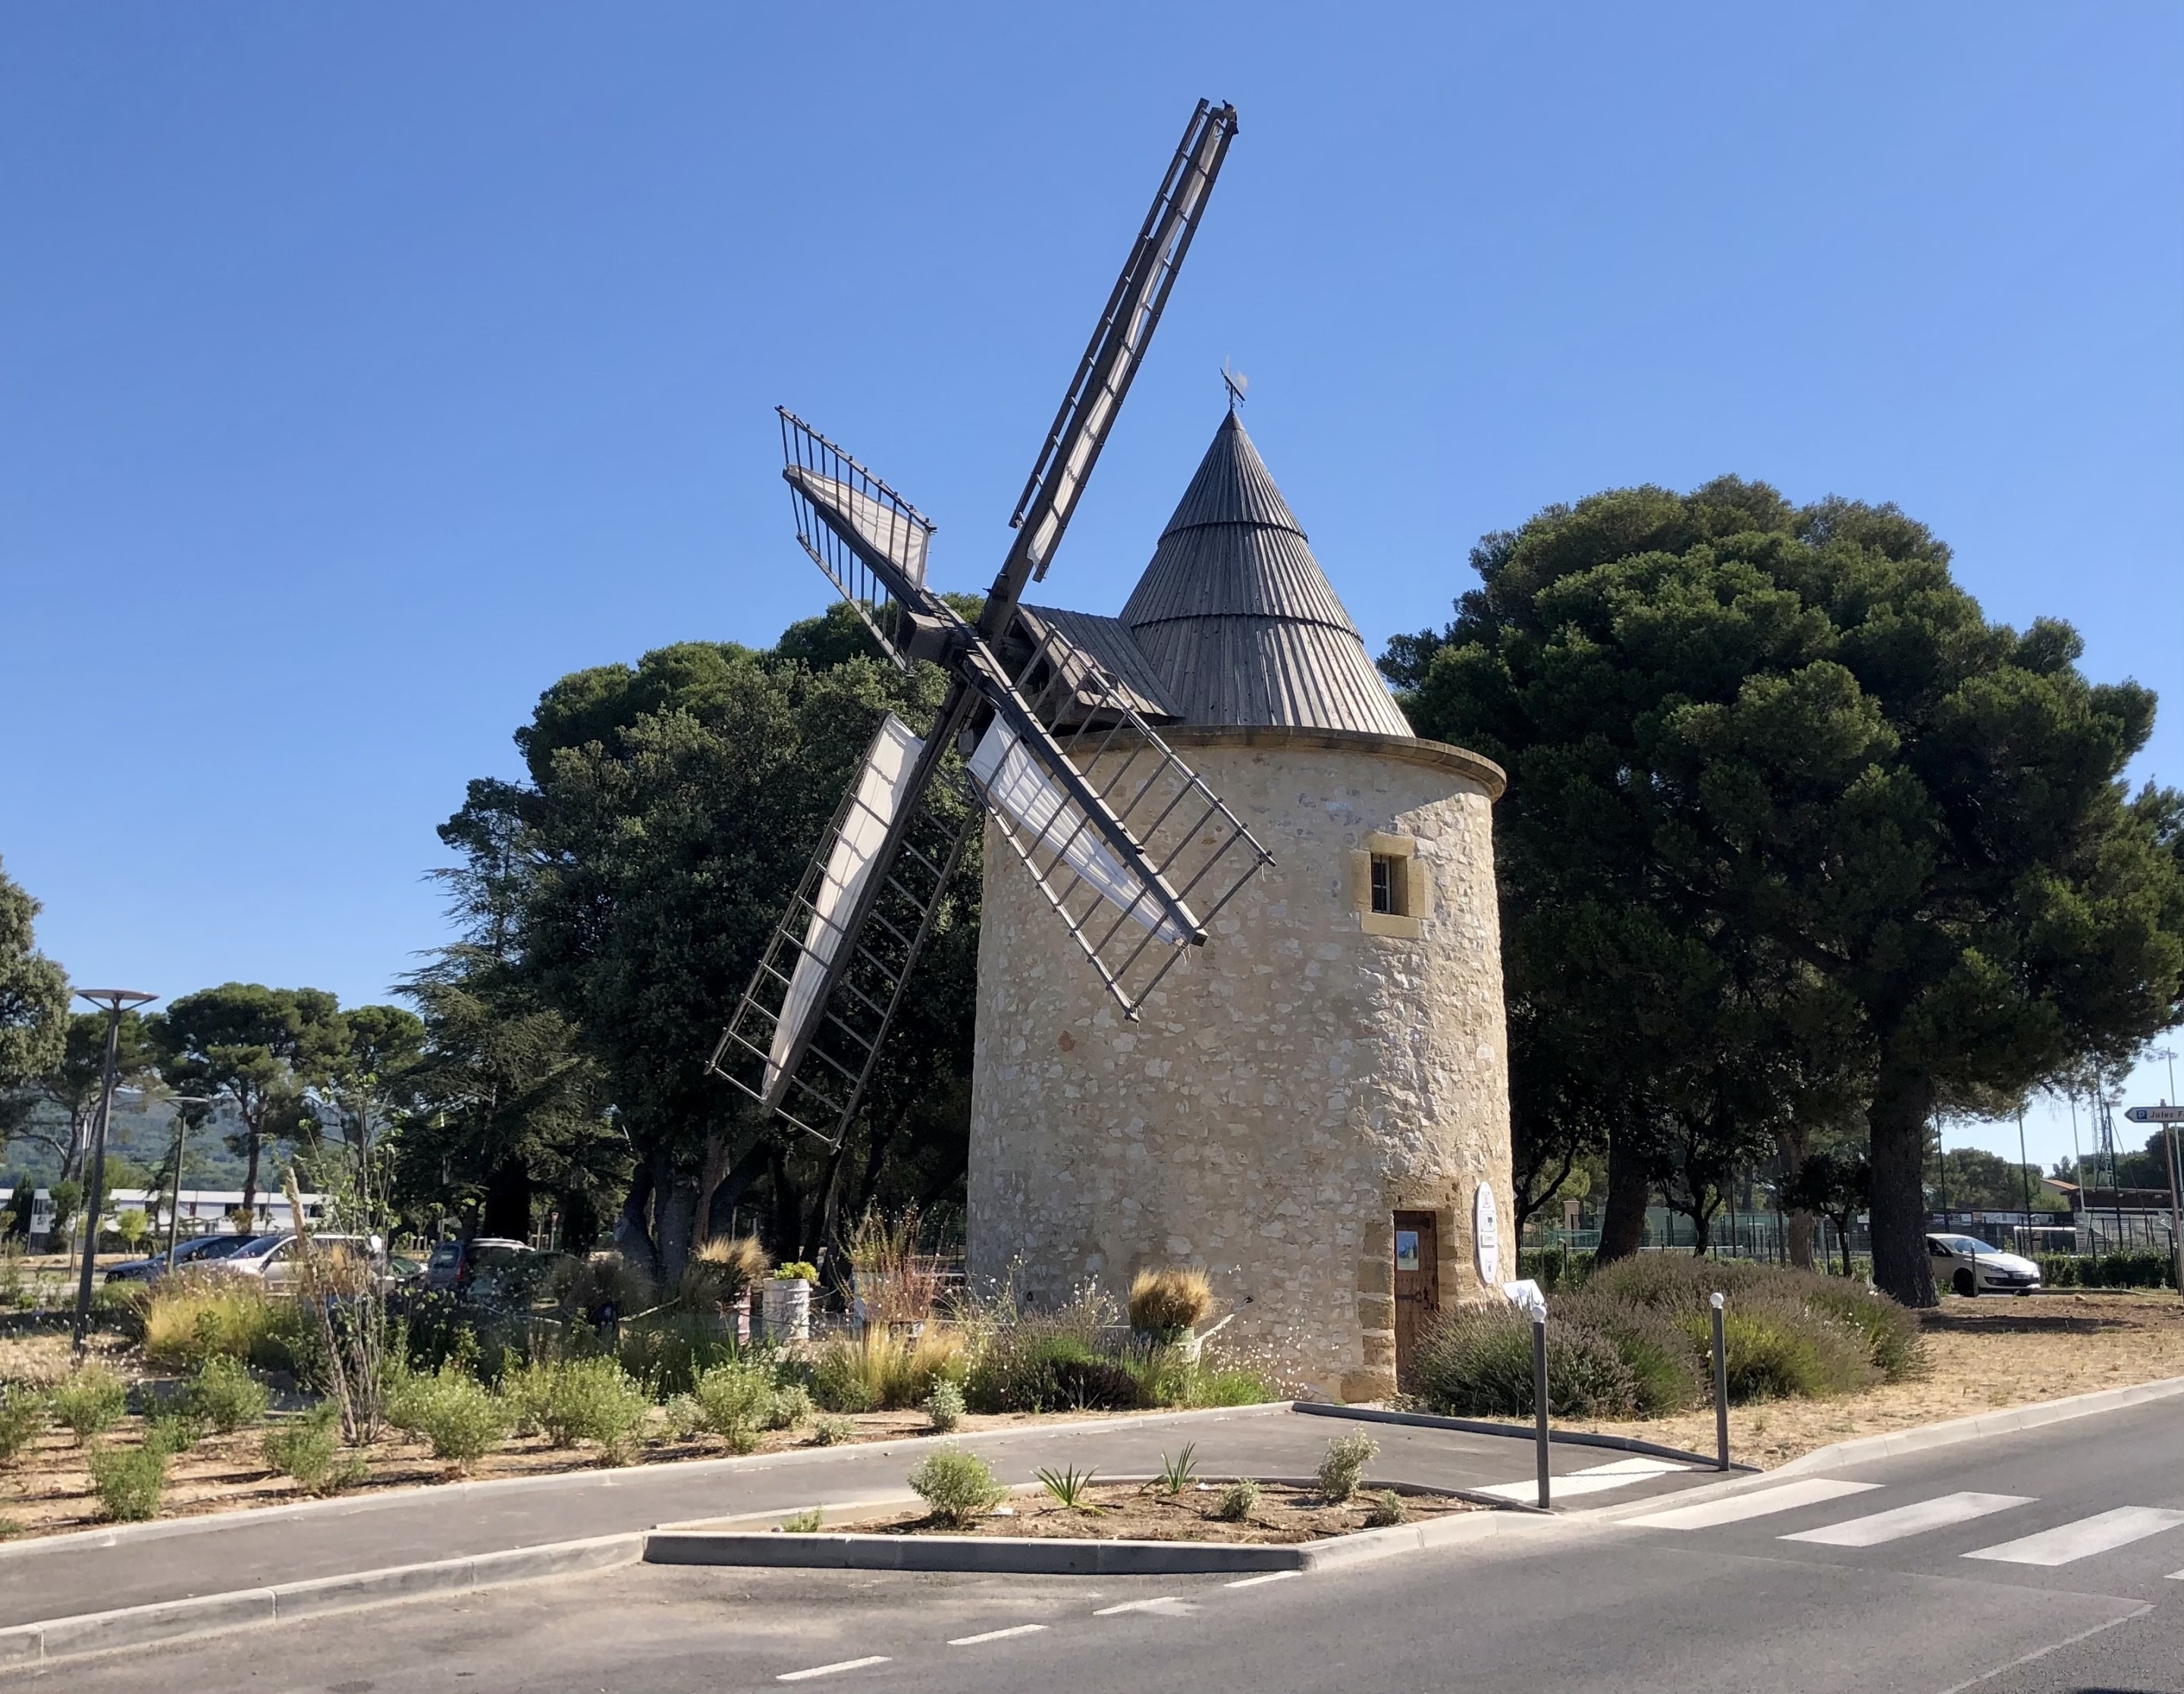 The Windmill of Bertoire